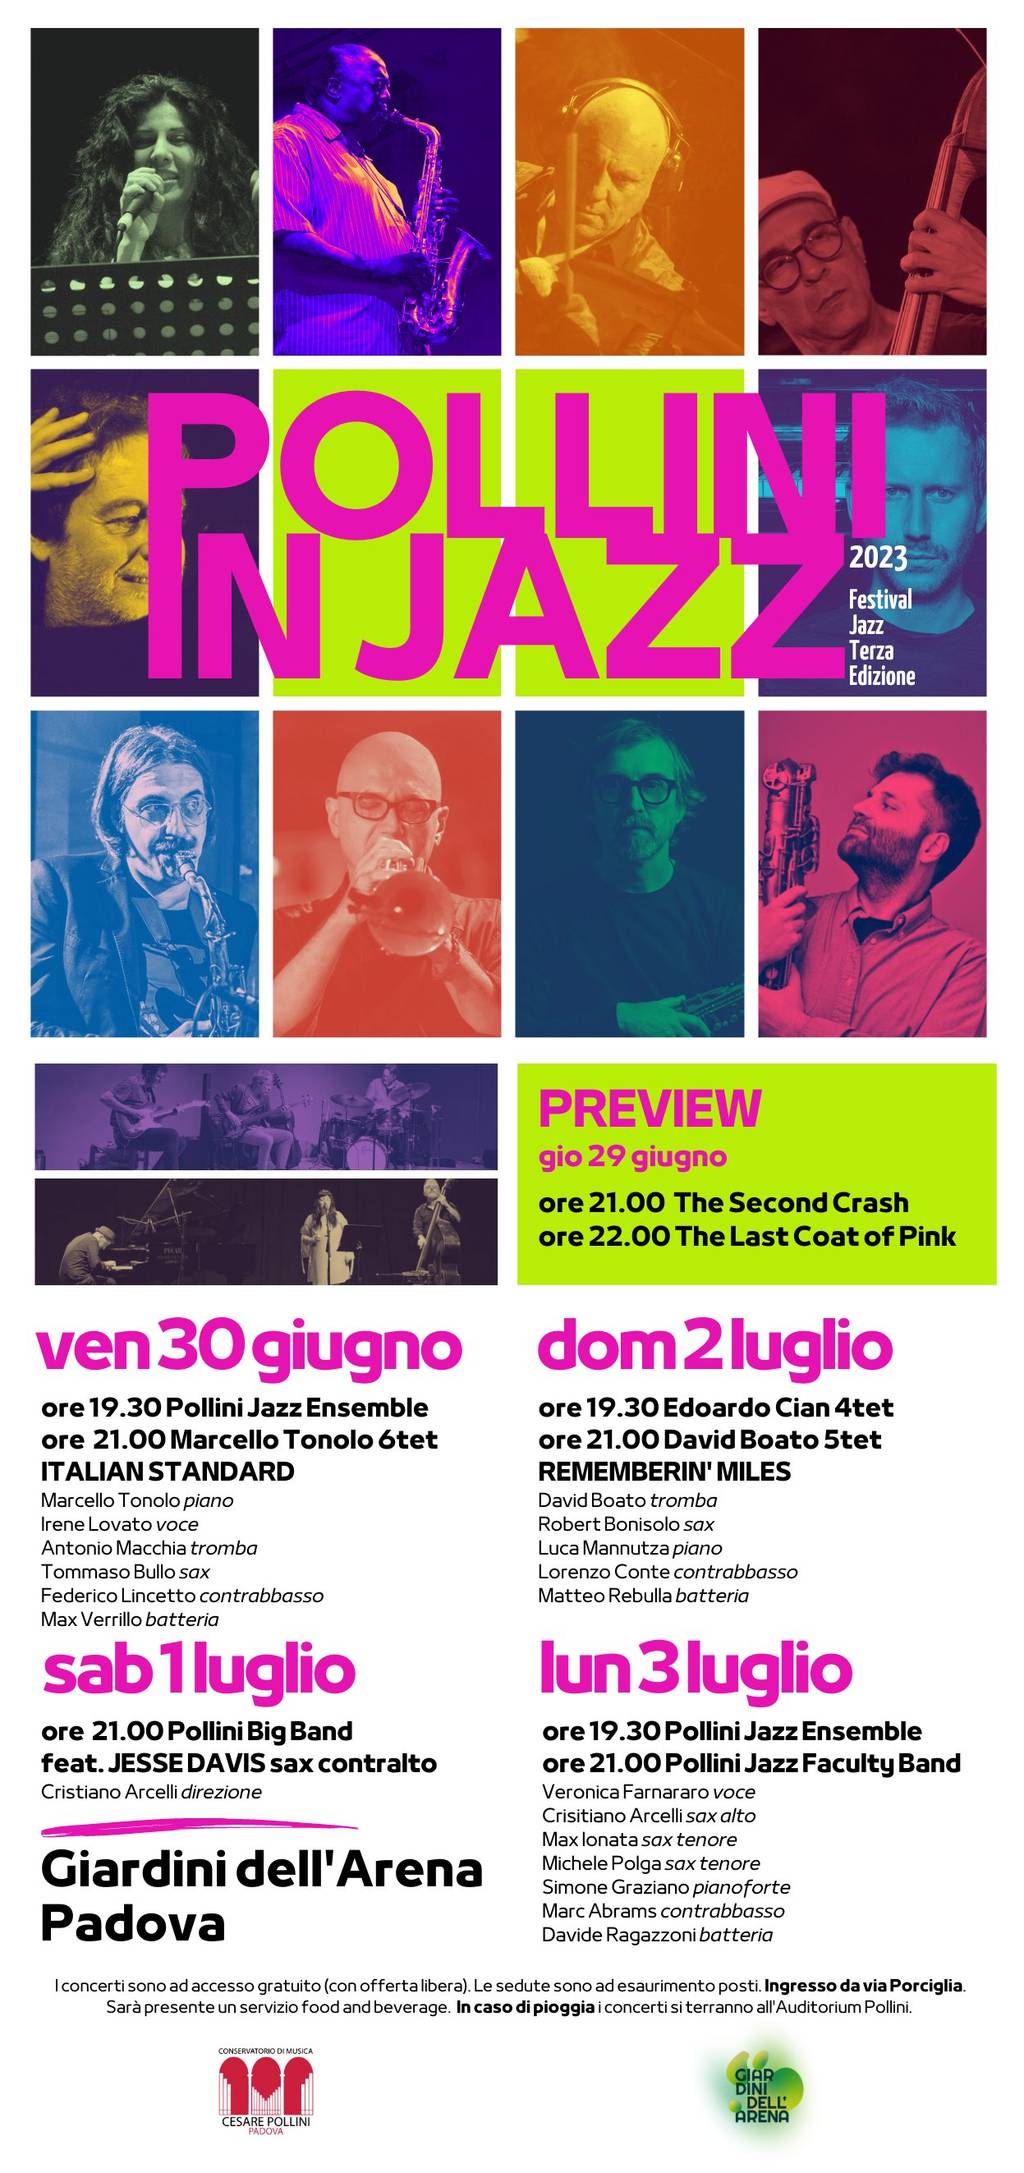 Pollini in Jazz 2023